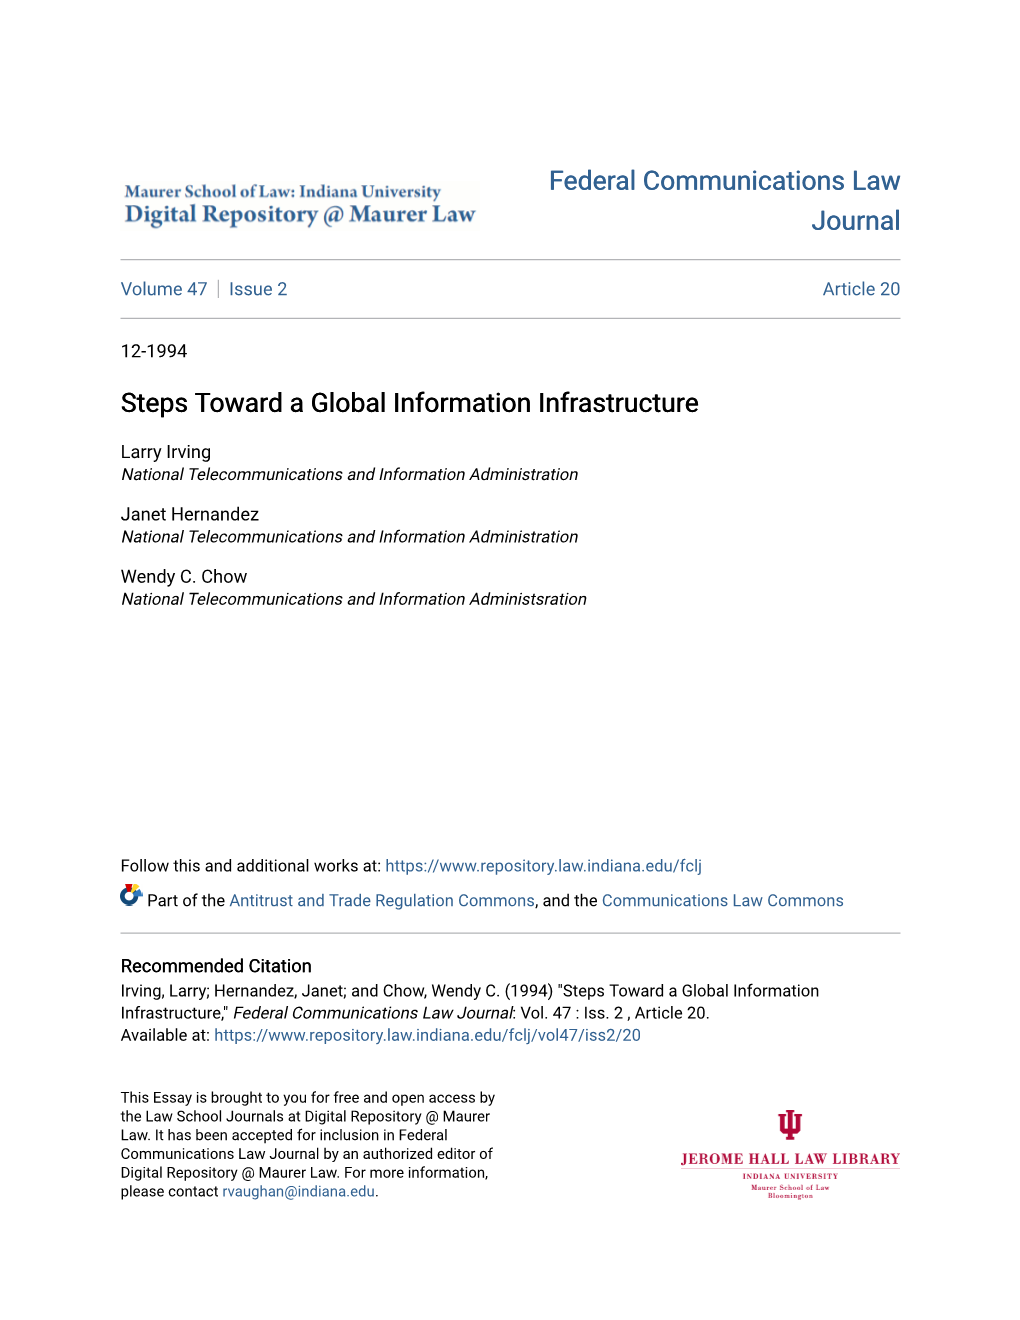 Steps Toward a Global Information Infrastructure